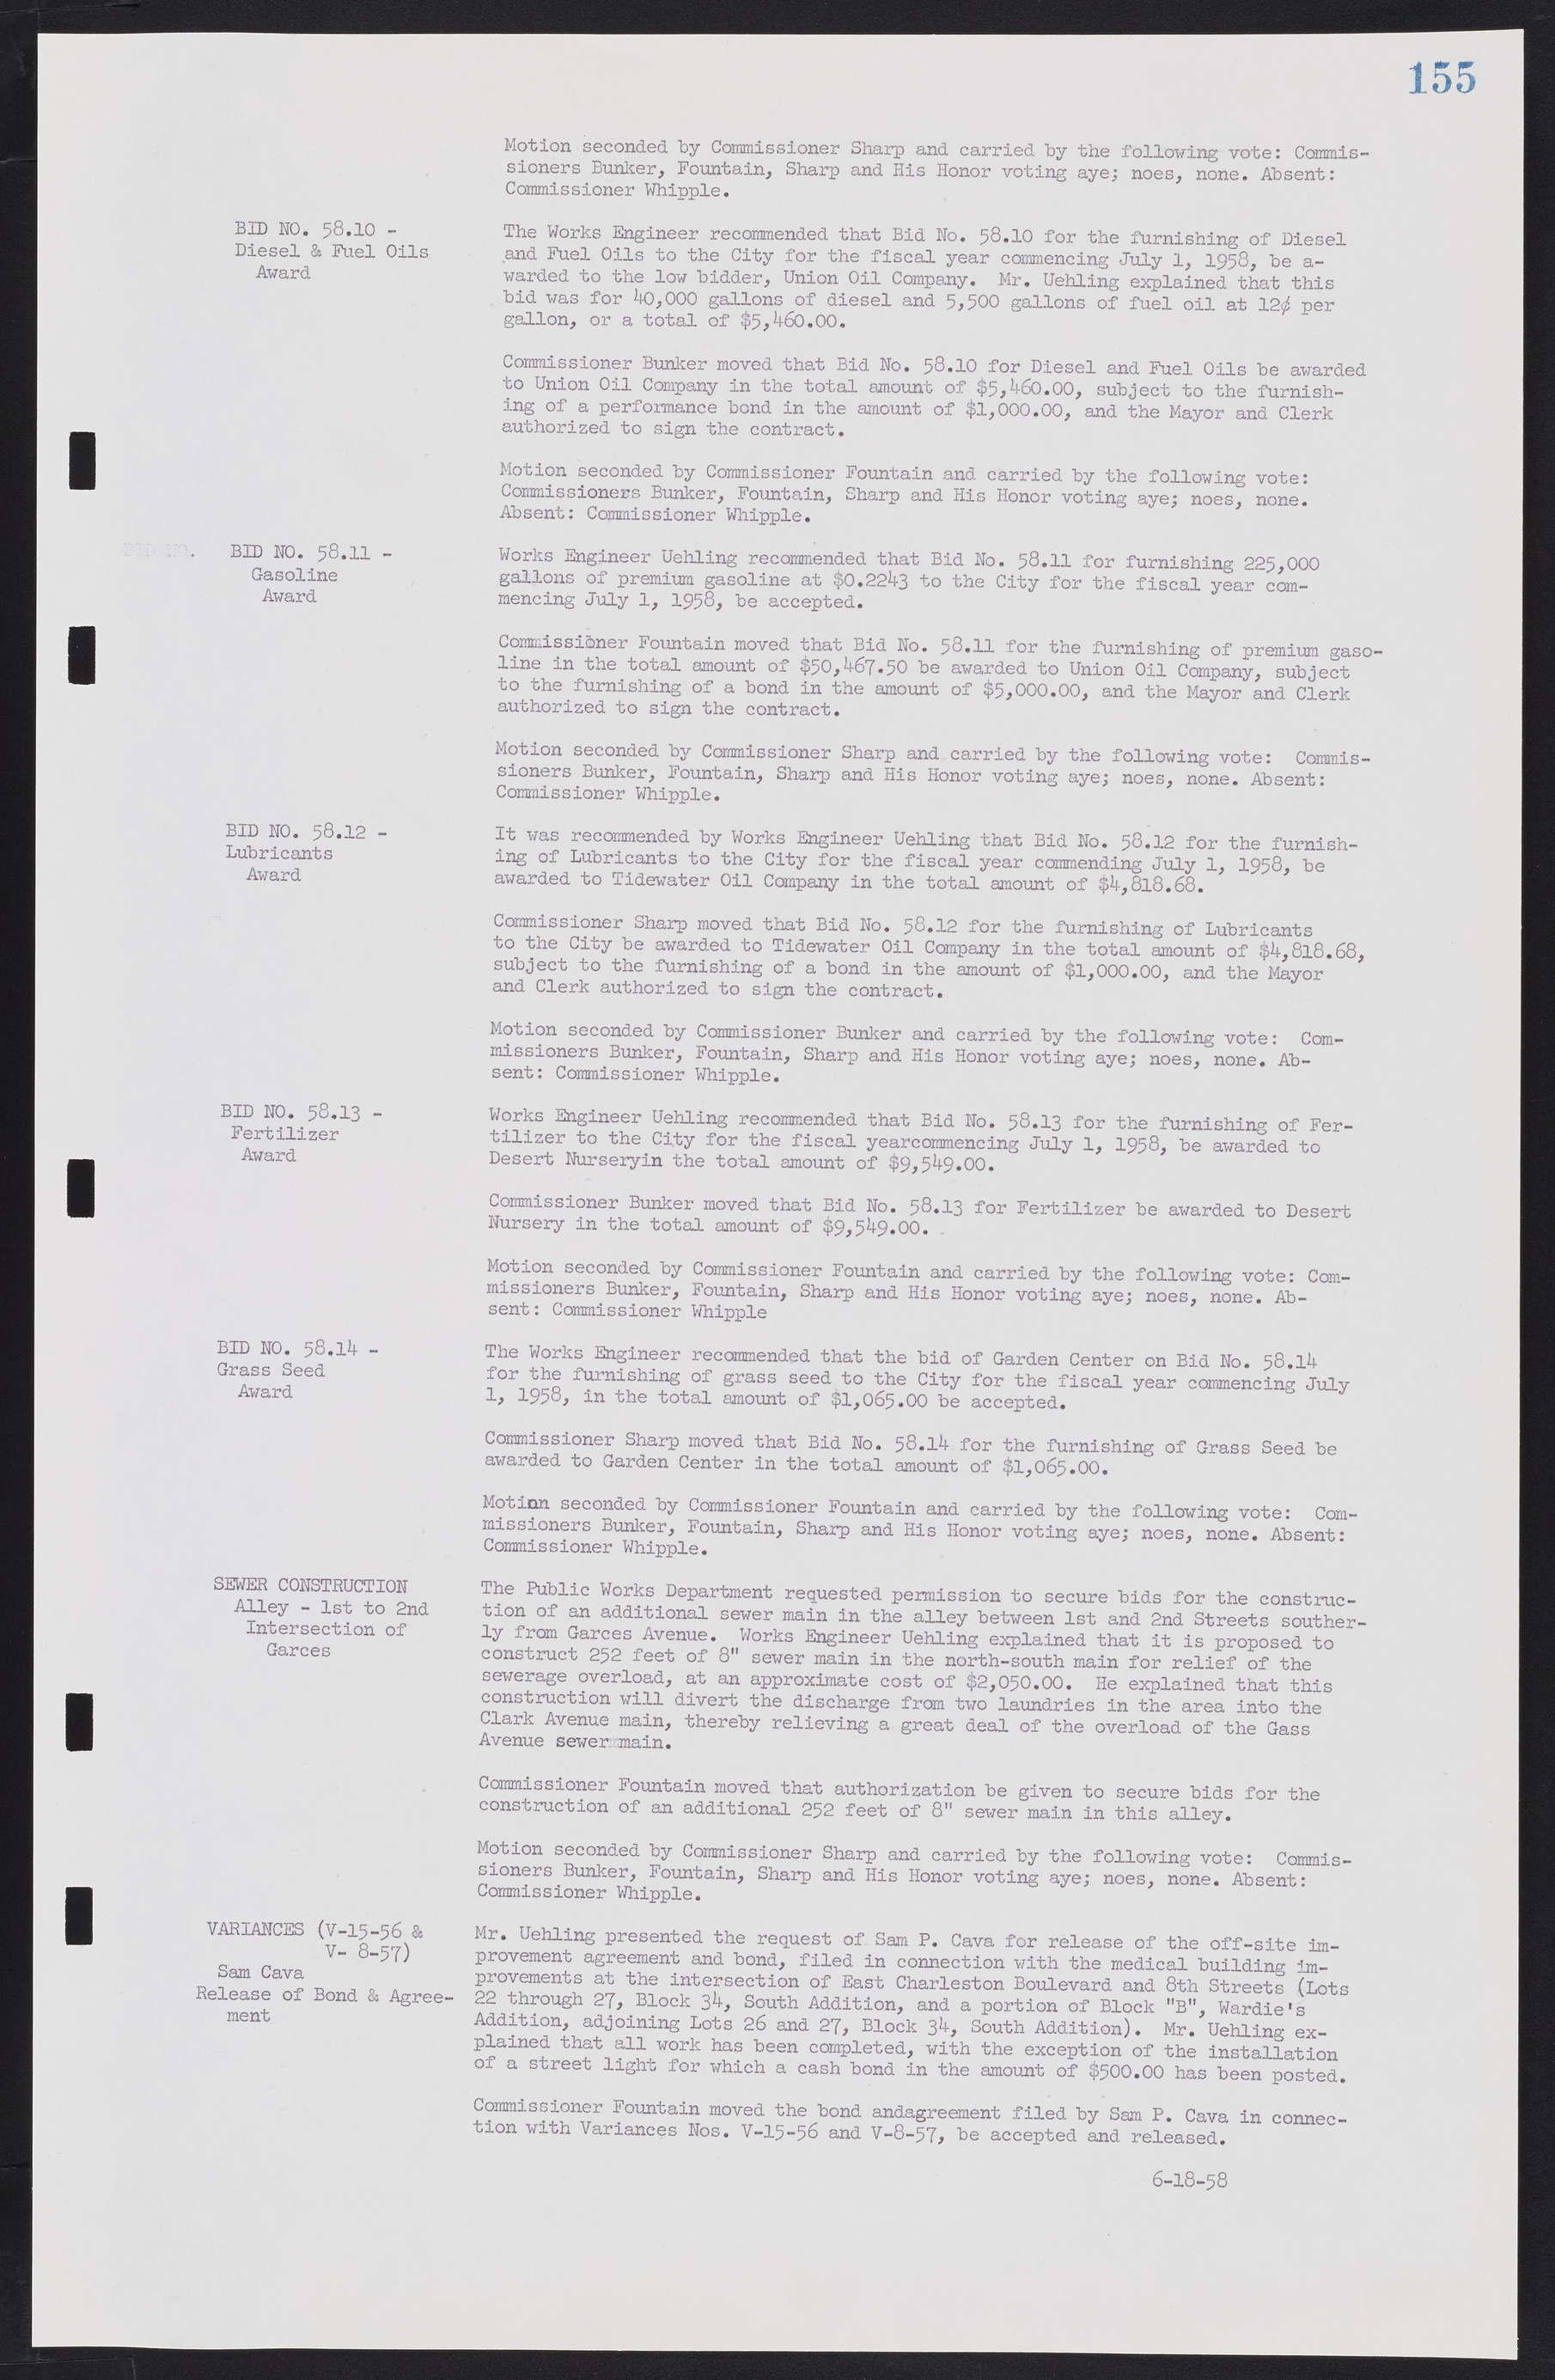 Las Vegas City Commission Minutes, November 20, 1957 to December 2, 1959, lvc000011-159